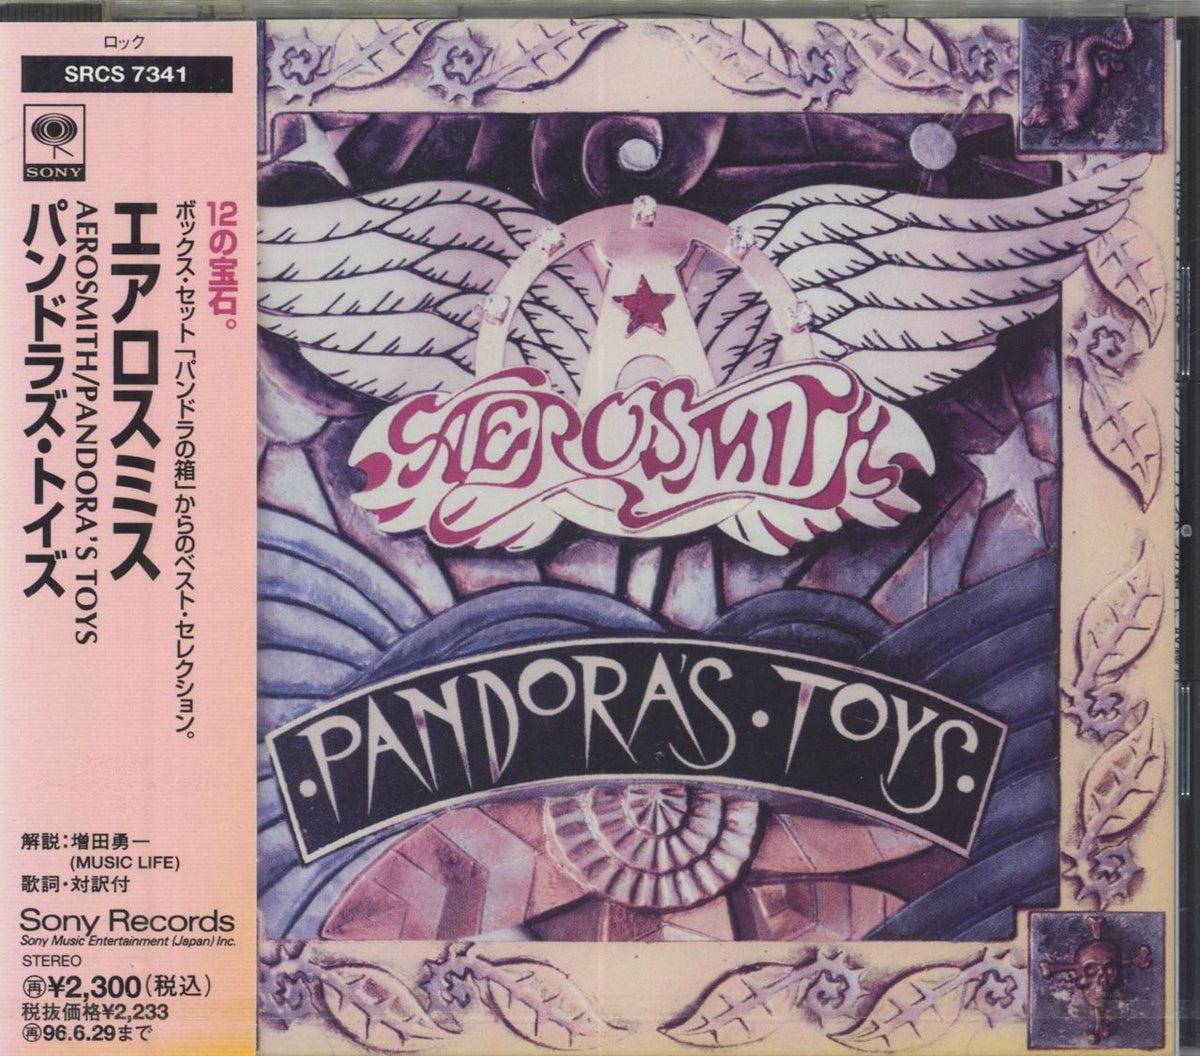 Aerosmith Pandora's Toys - Sealed Japanese CD album